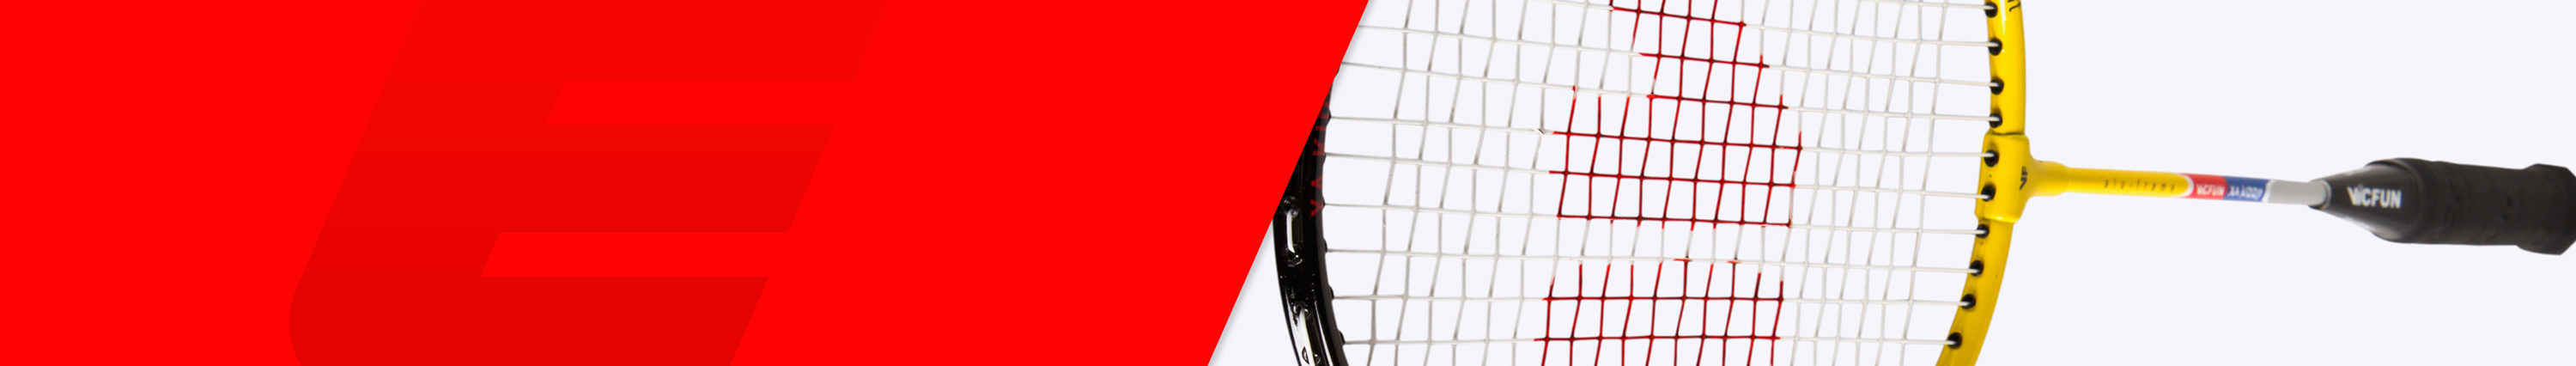 Sportmateriaal-Erhard-Sport-badmintonmateriaal